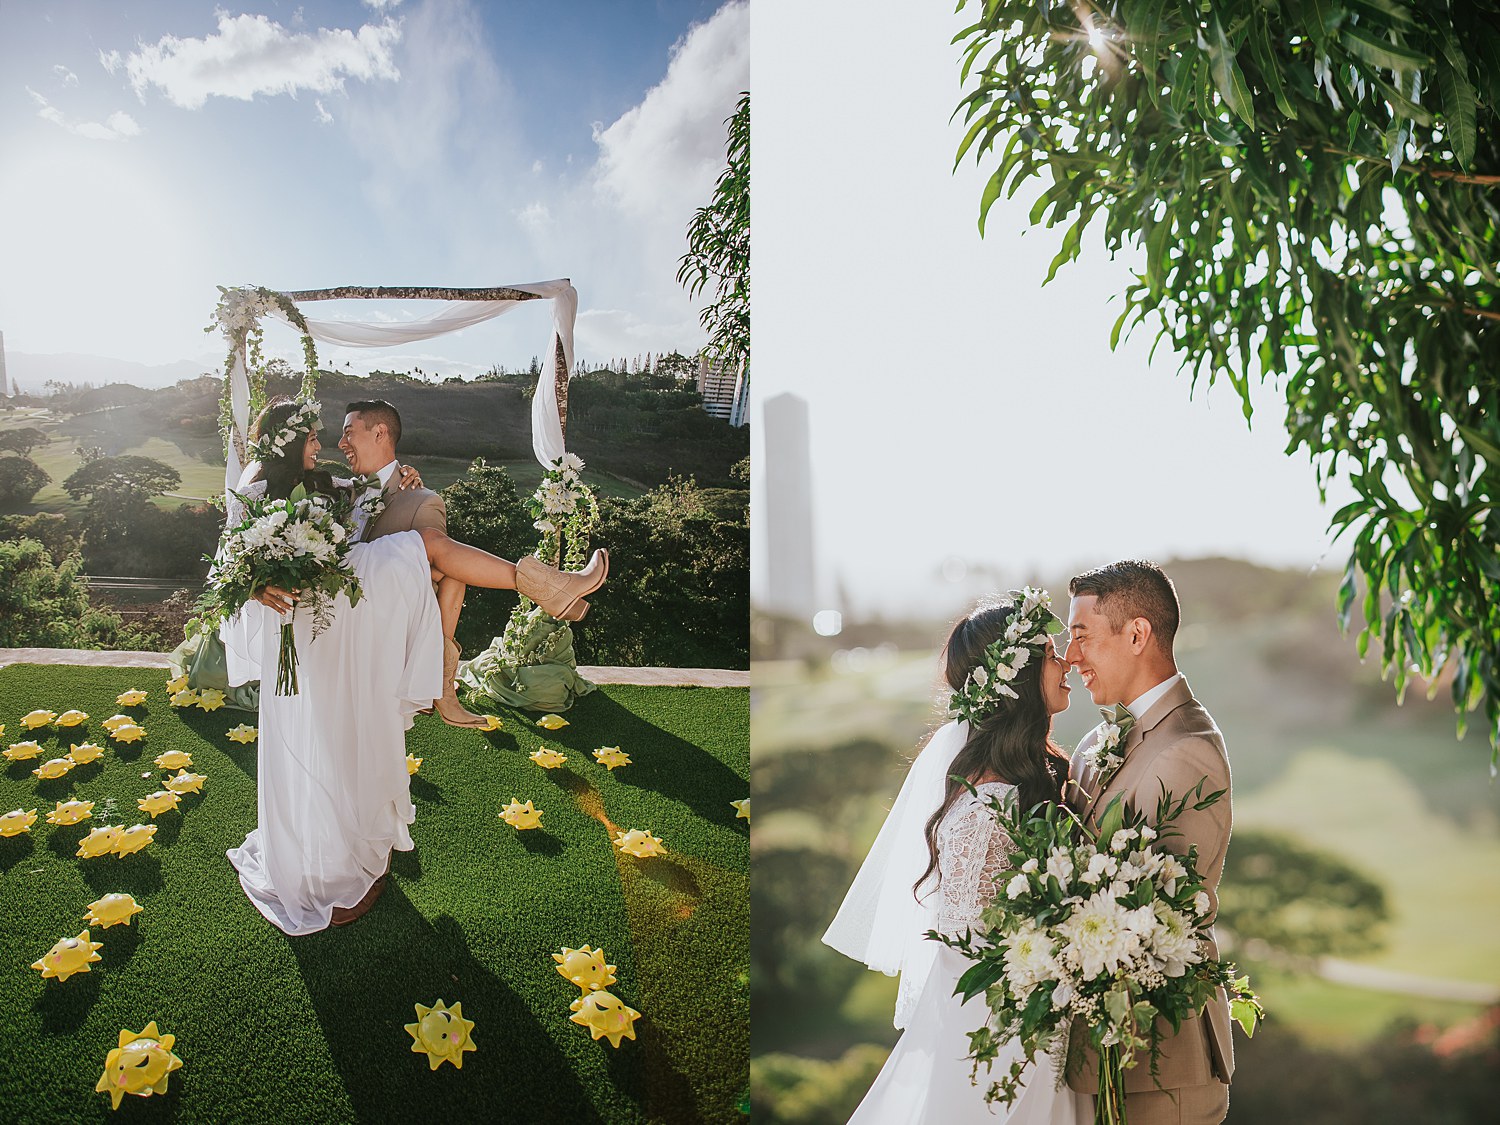 backyard wedding during hawaii's covid restrictions